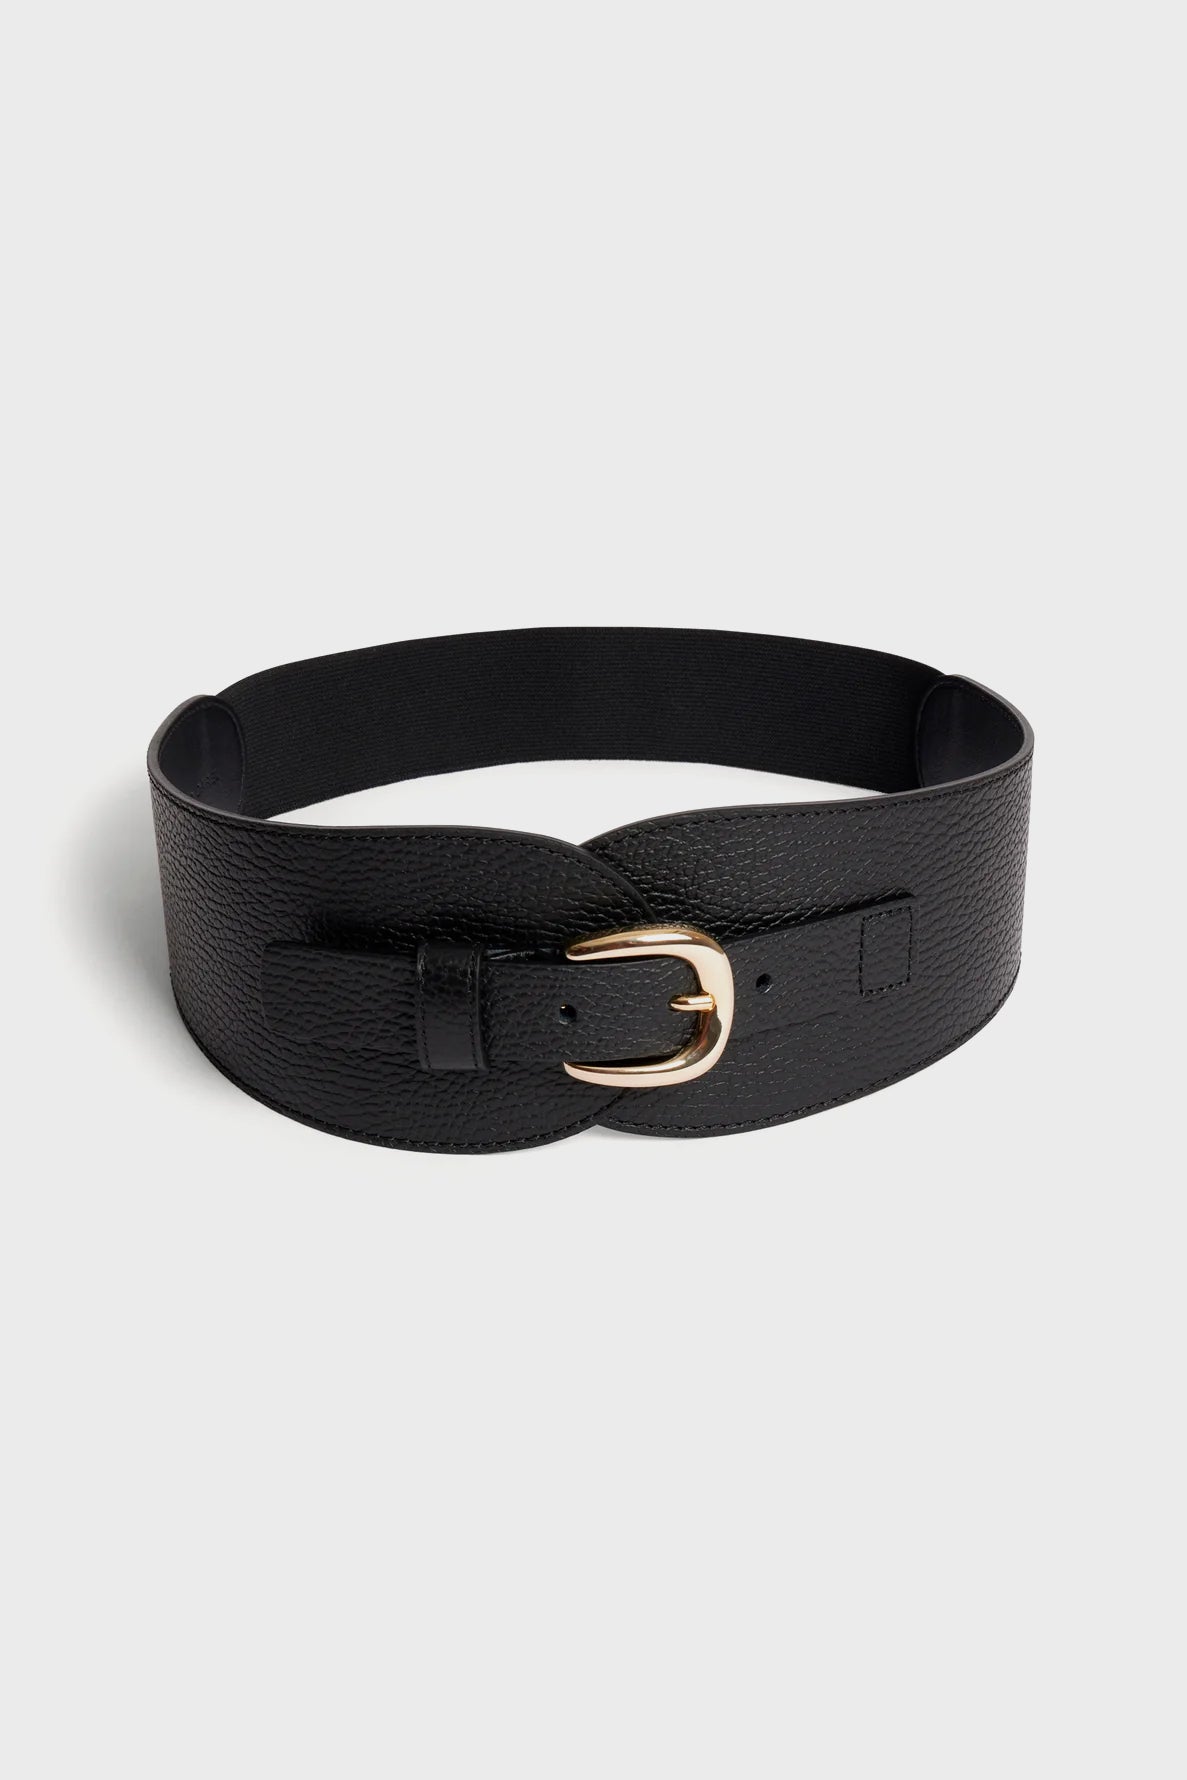 Corset belt in black suede leather - OLYMPE | Gerard Darel